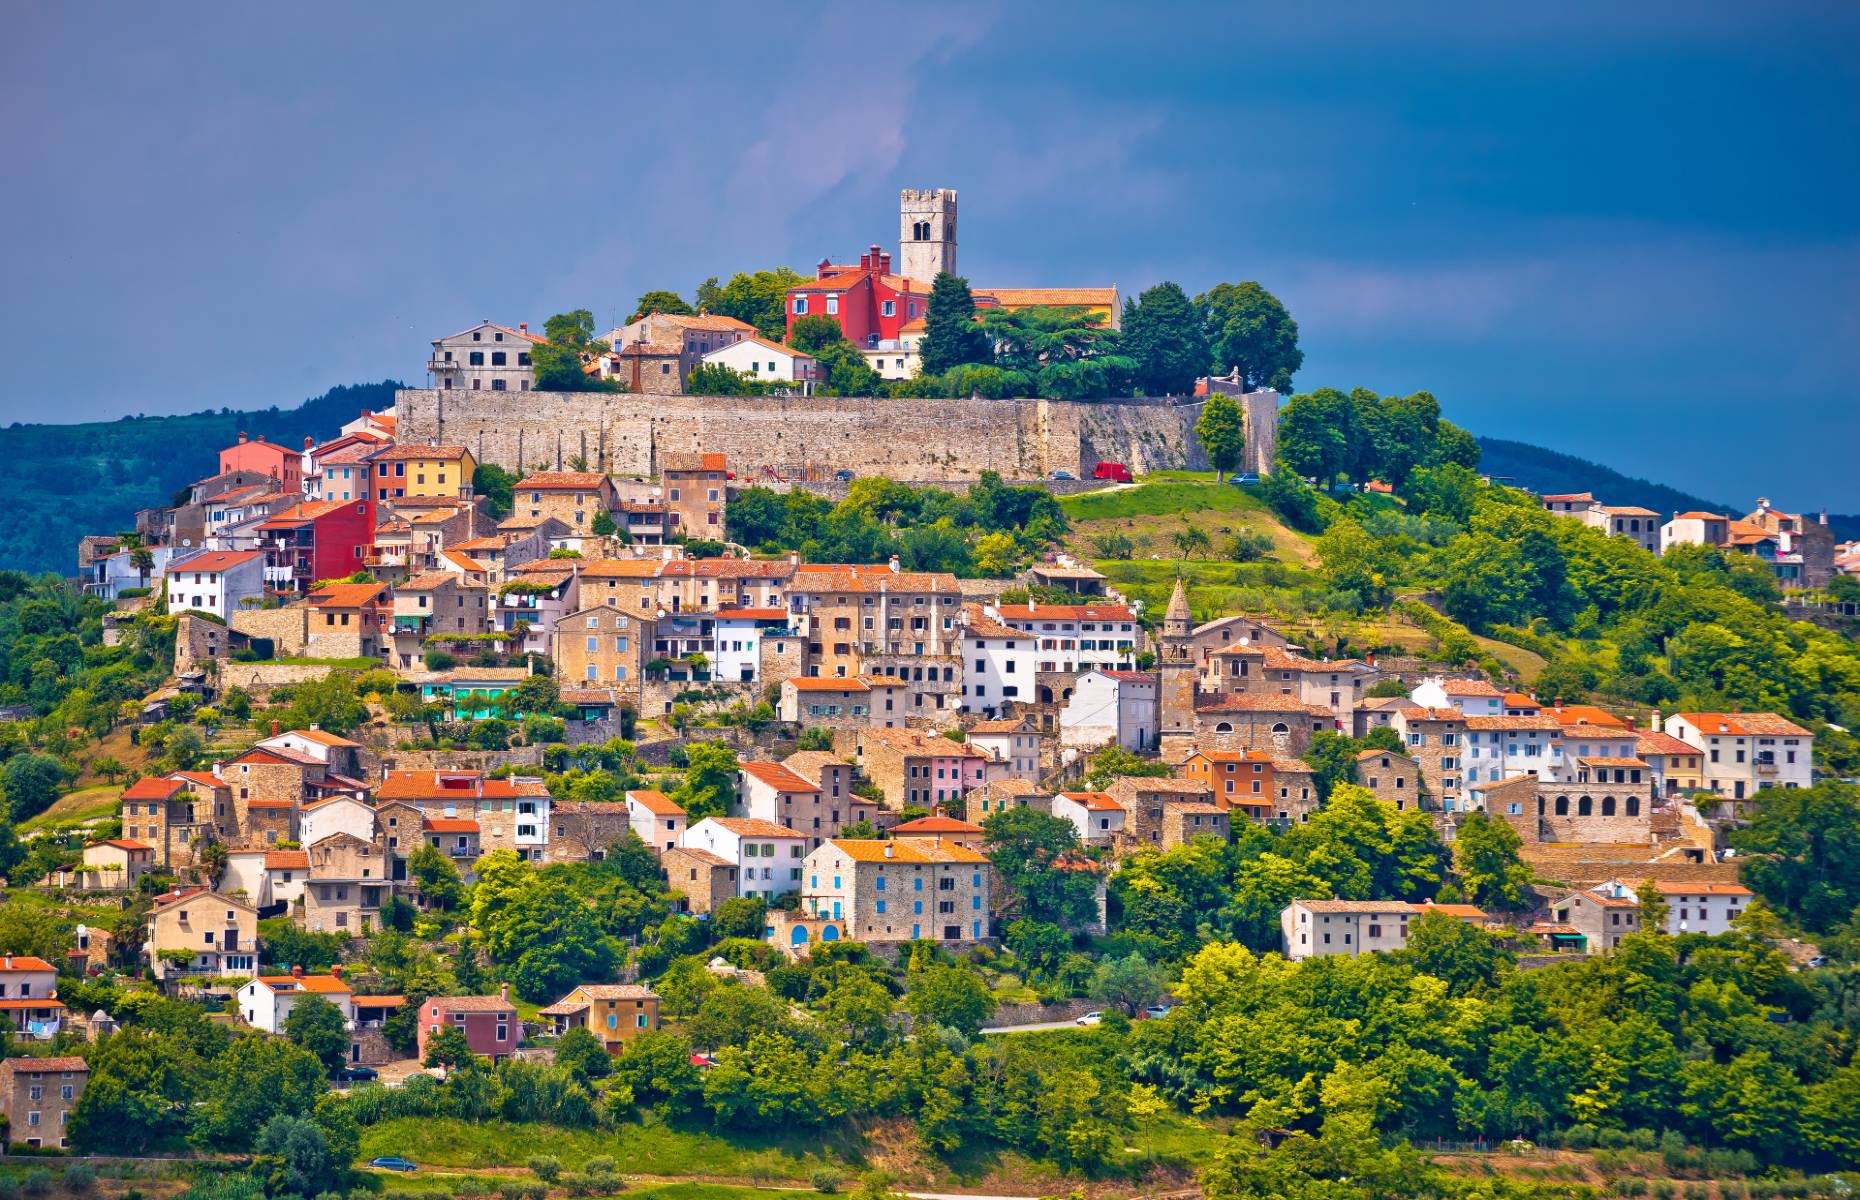 Motovun, Istria (Image: xbrchx/Shutterstock)